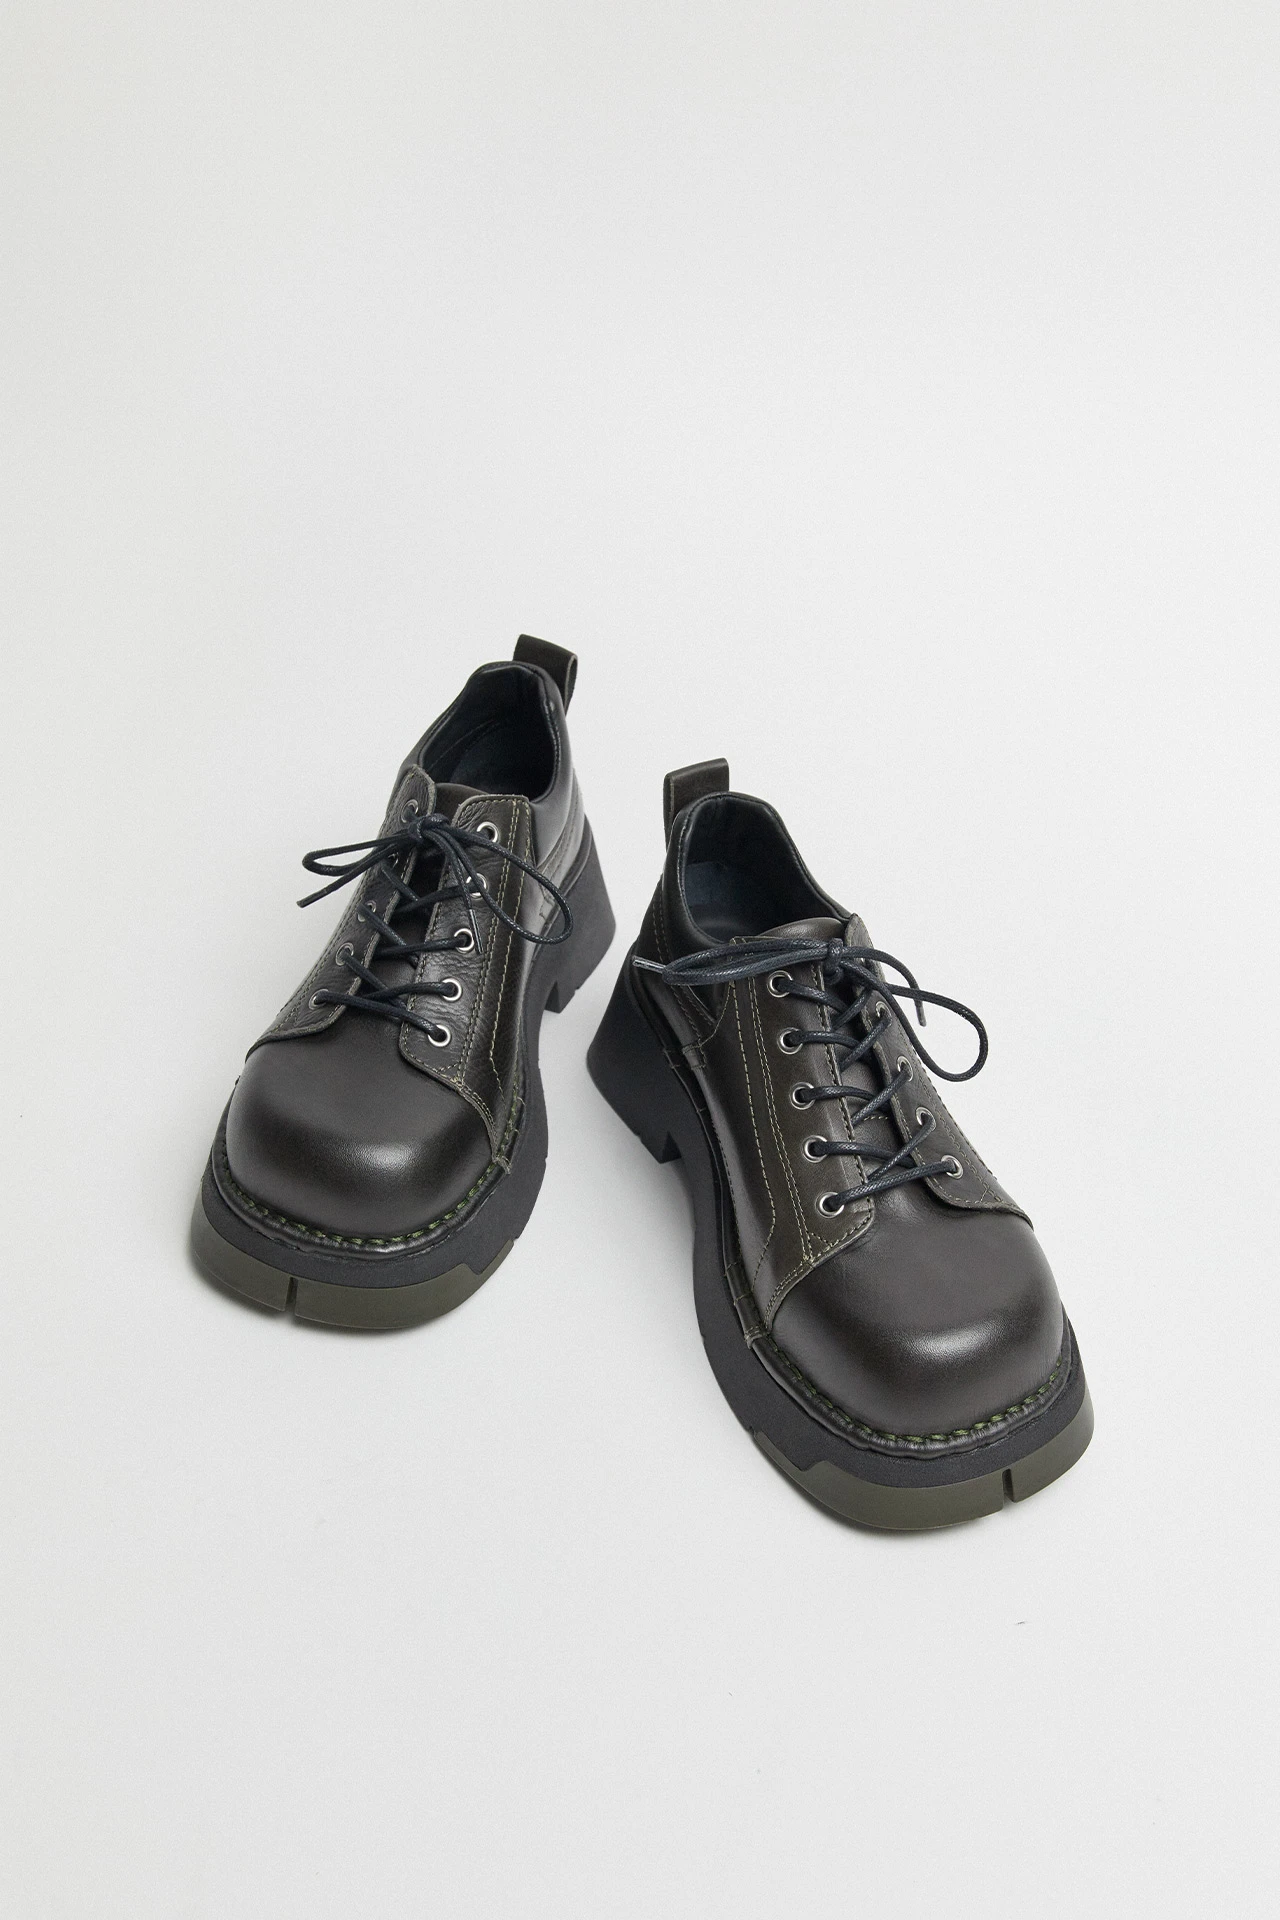 Miista-erina-khaki-ankle-boots-04